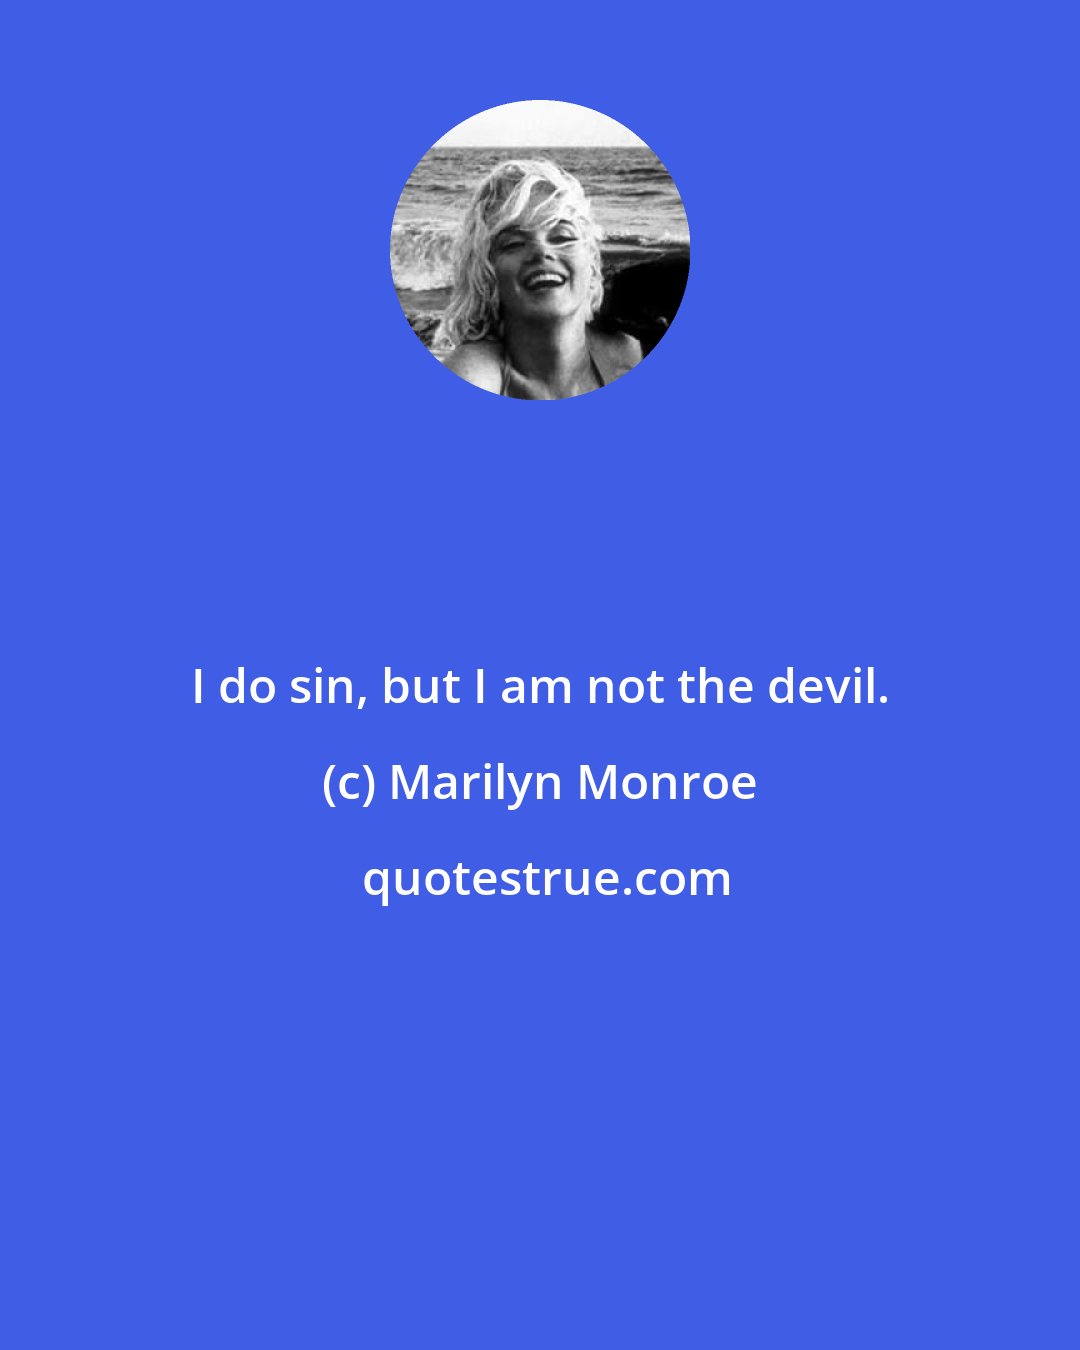 Marilyn Monroe: I do sin, but I am not the devil.